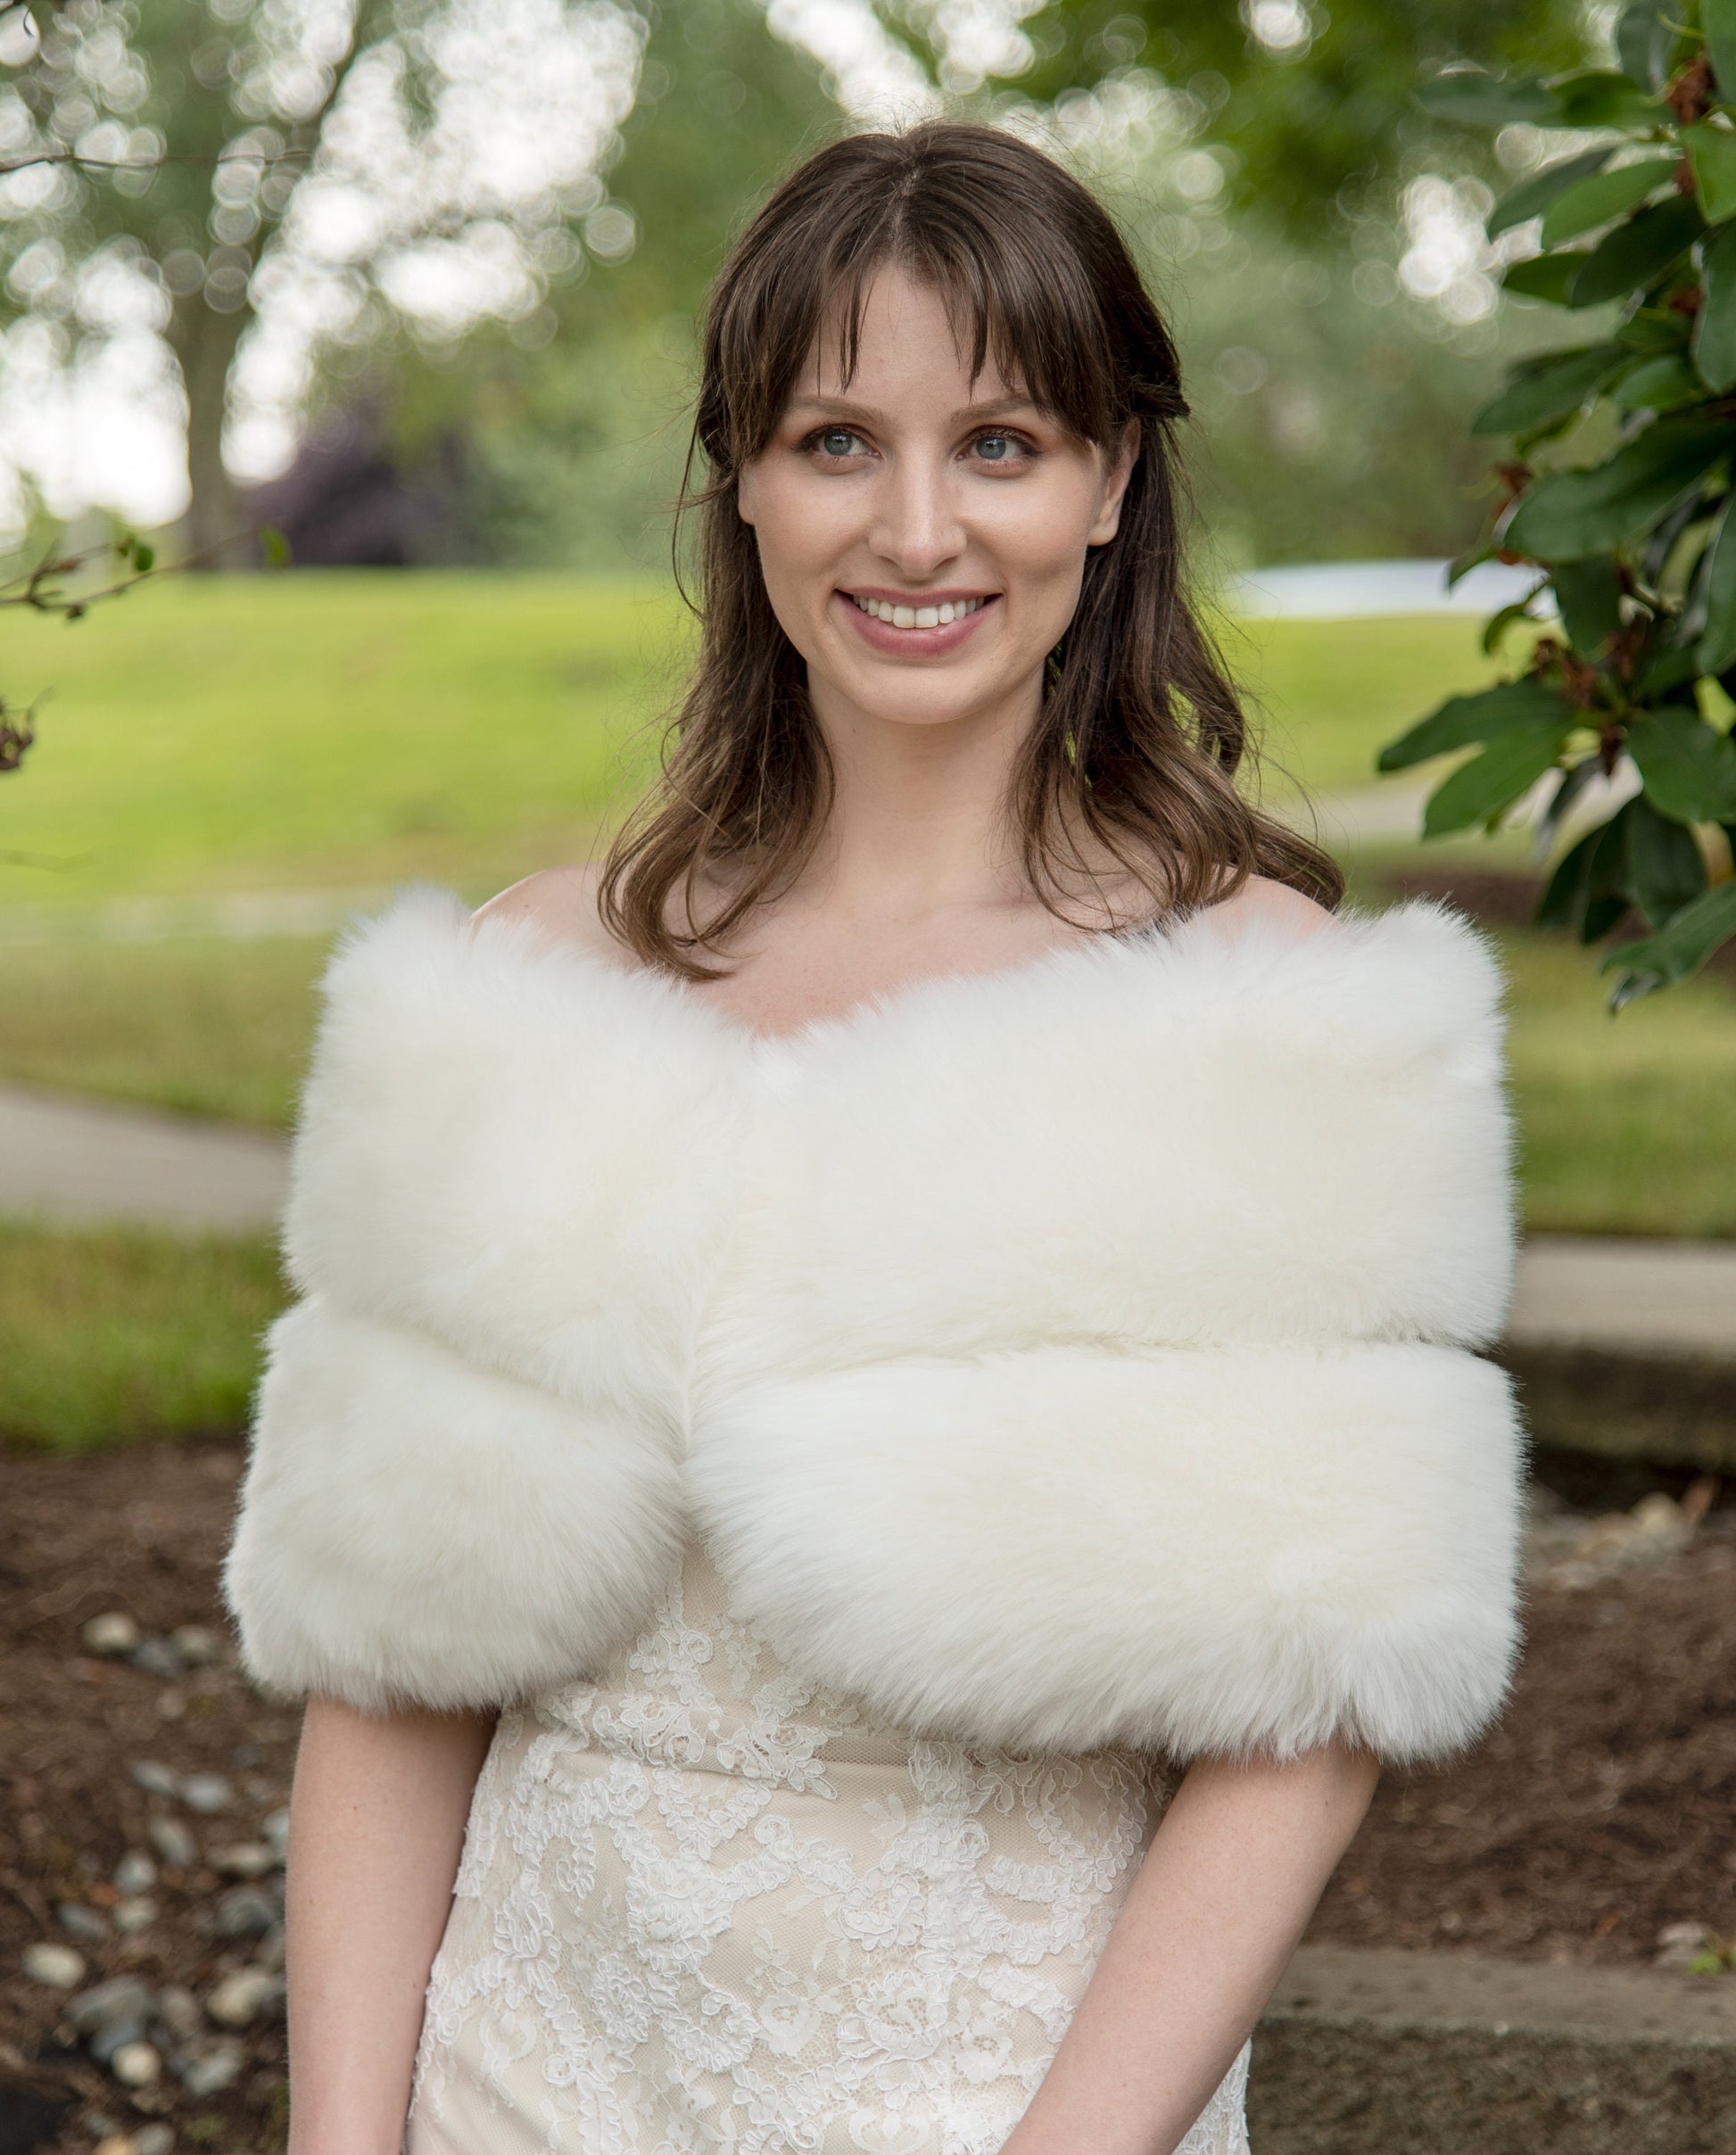 Ivory faux fur bridal wrap, wedding faux fur shawl, faux fur bridal stole, faux fur cape B015-Ivory